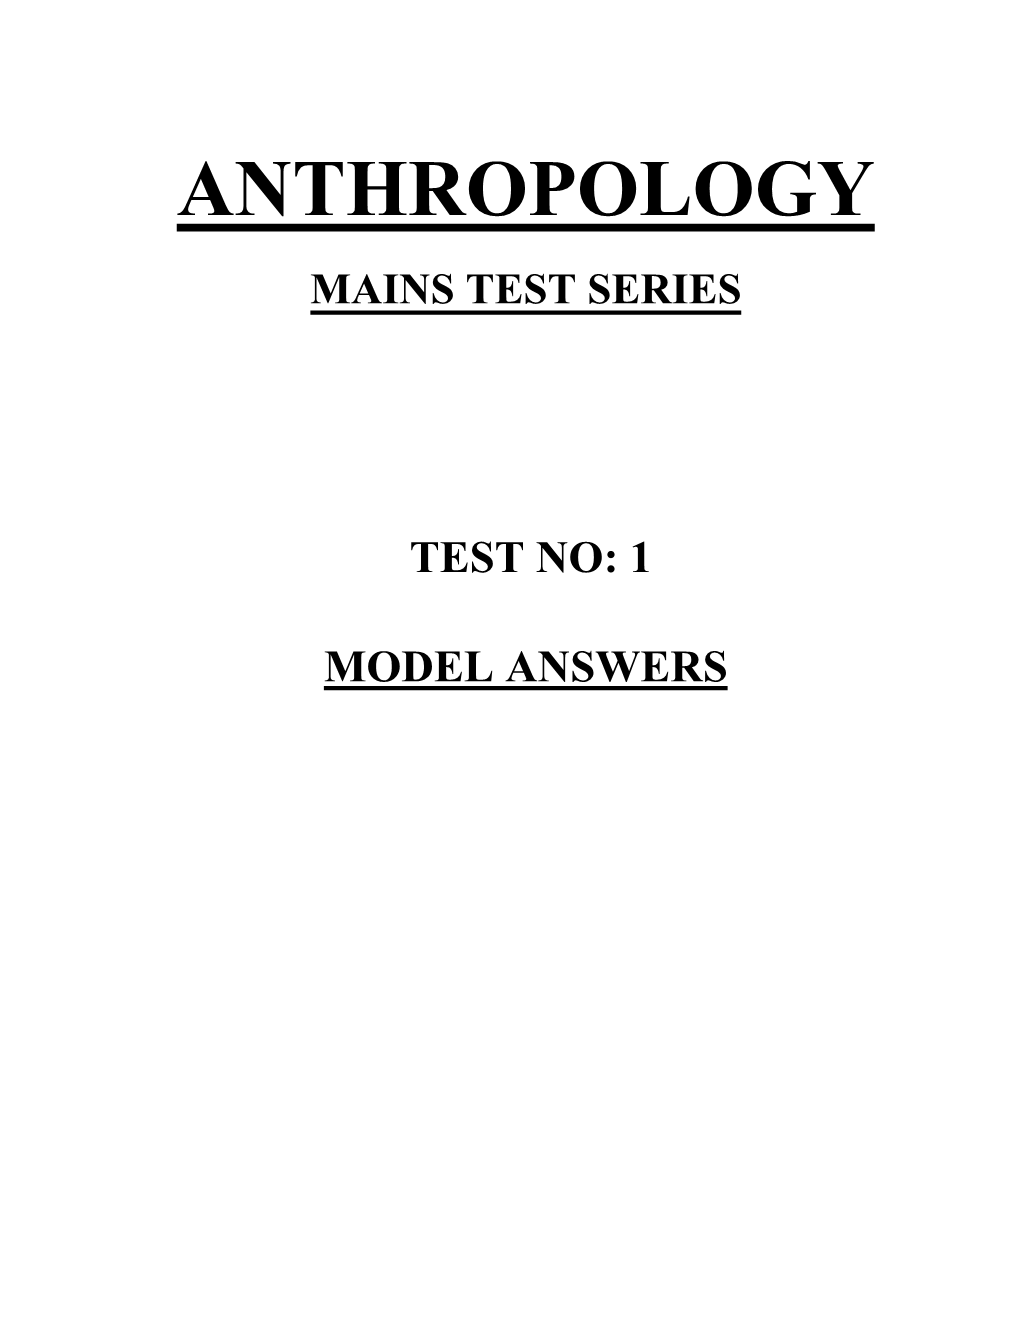 Anthropology Mains Test Series